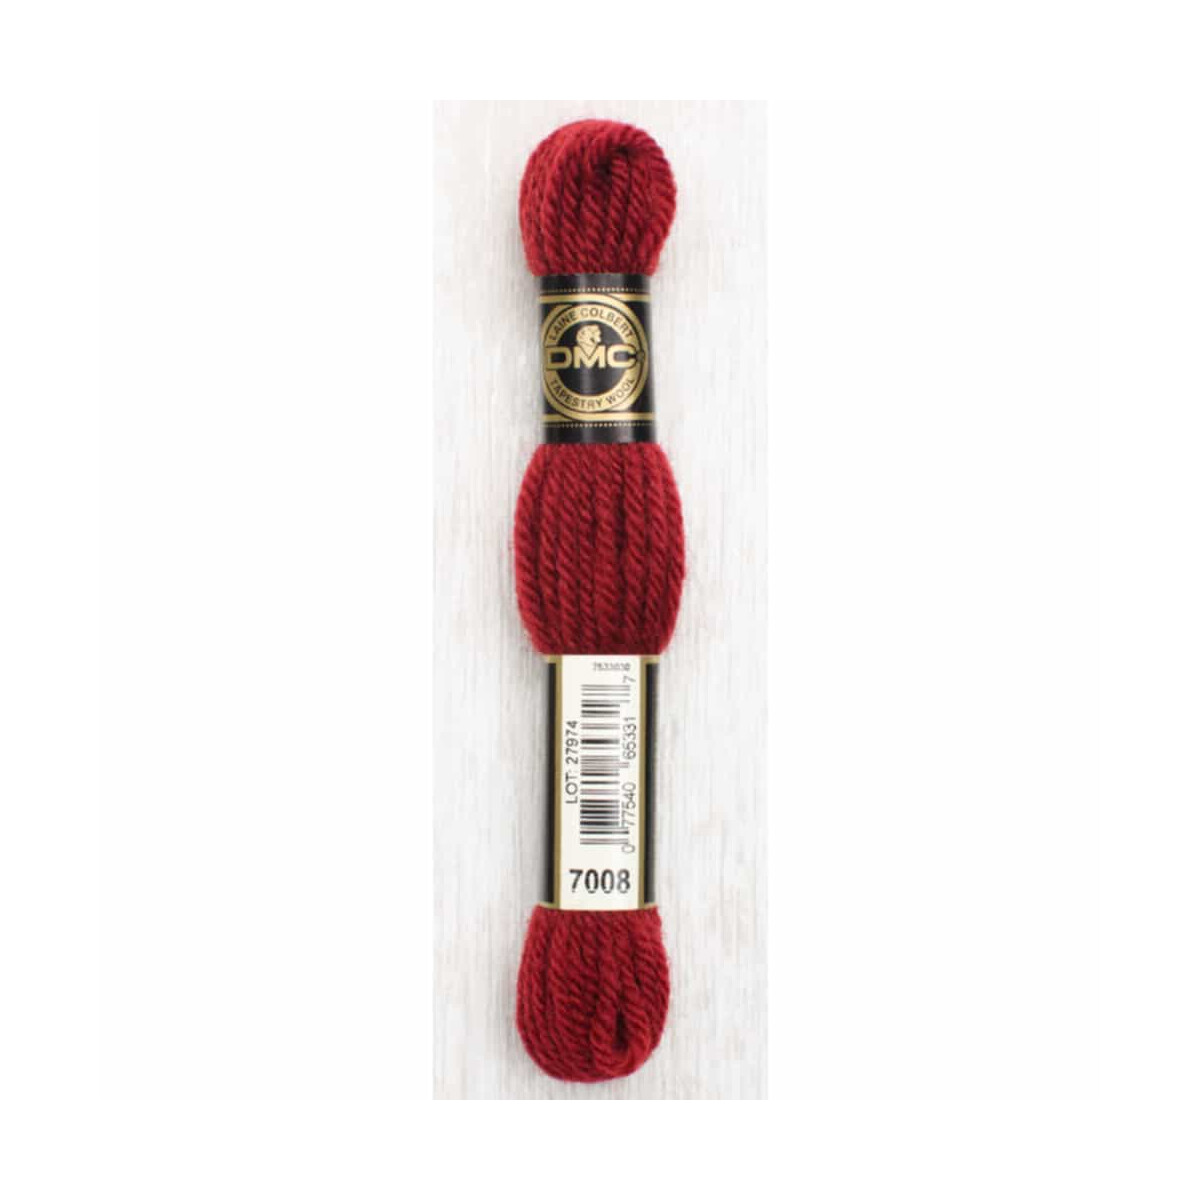 DMC Laine Colbert wool, 8m, 486-7008